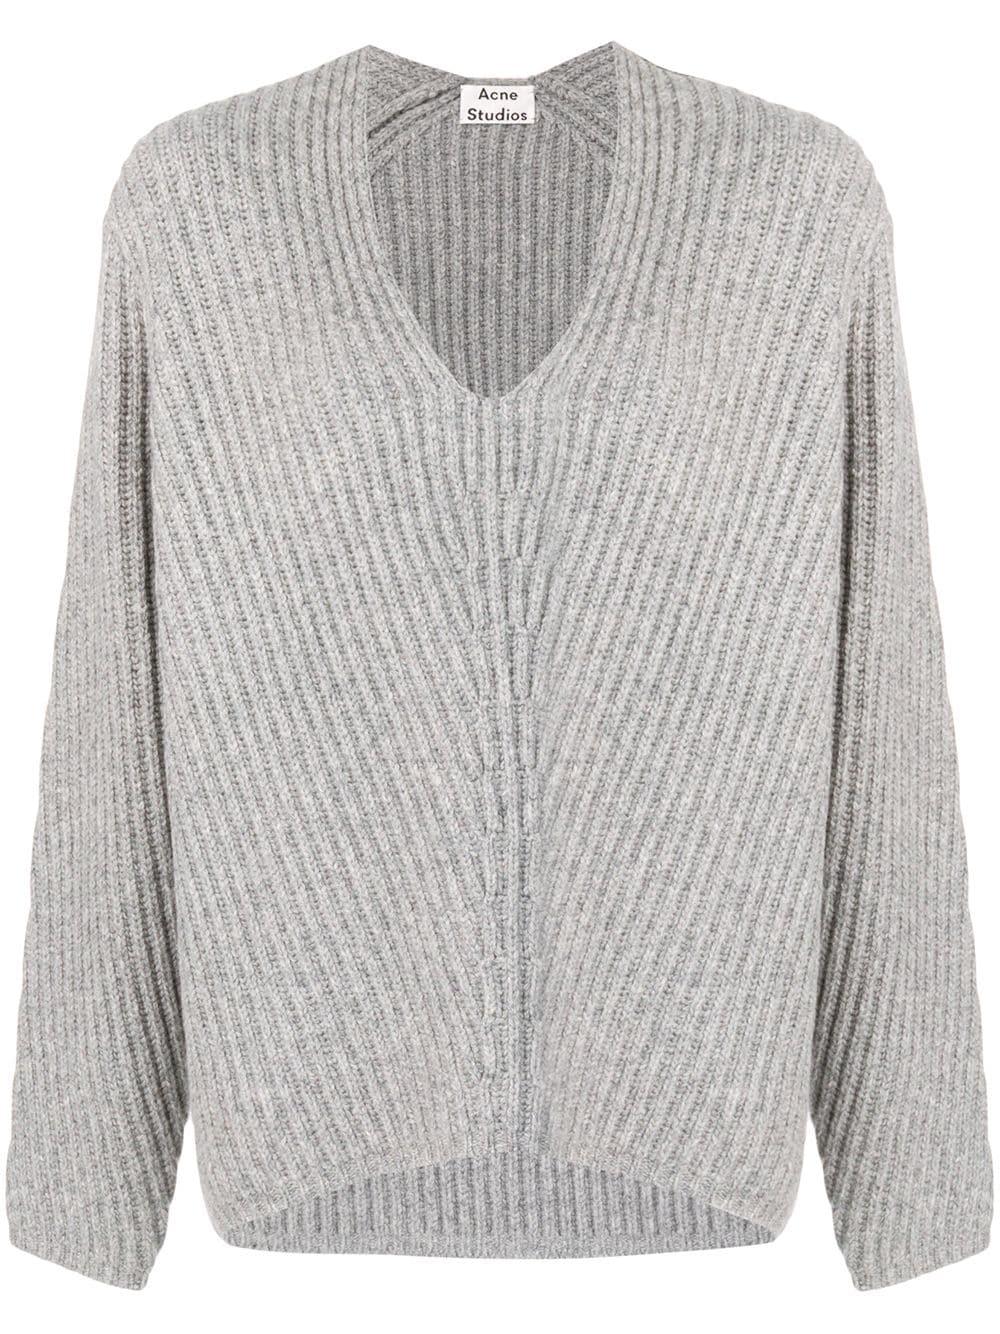 Acne Studios Wool Deborah V-neck Sweater in Grey (Gray) - Lyst